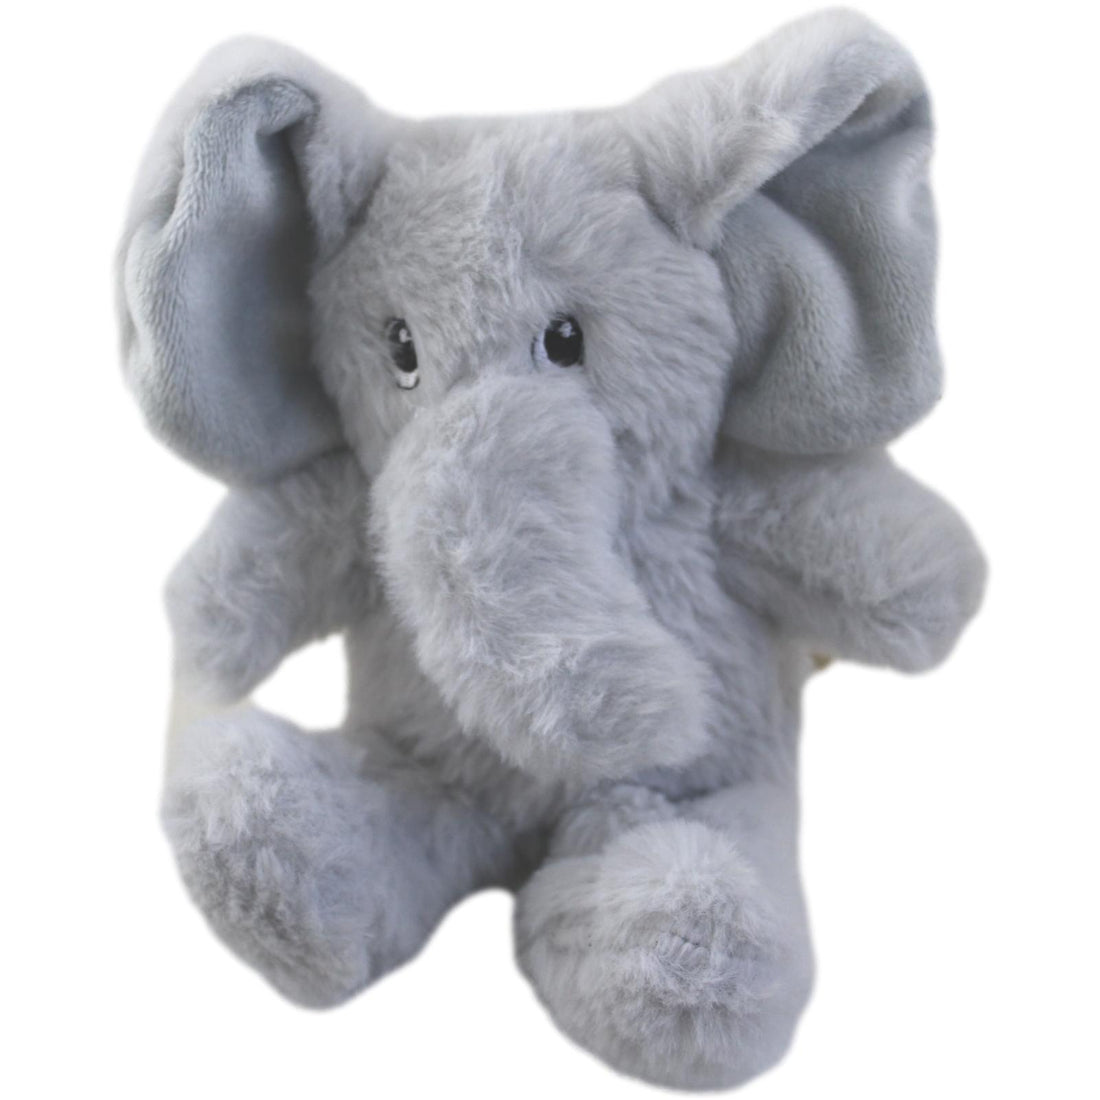 Grey Elephant Teddy Soft Toy for a Baby